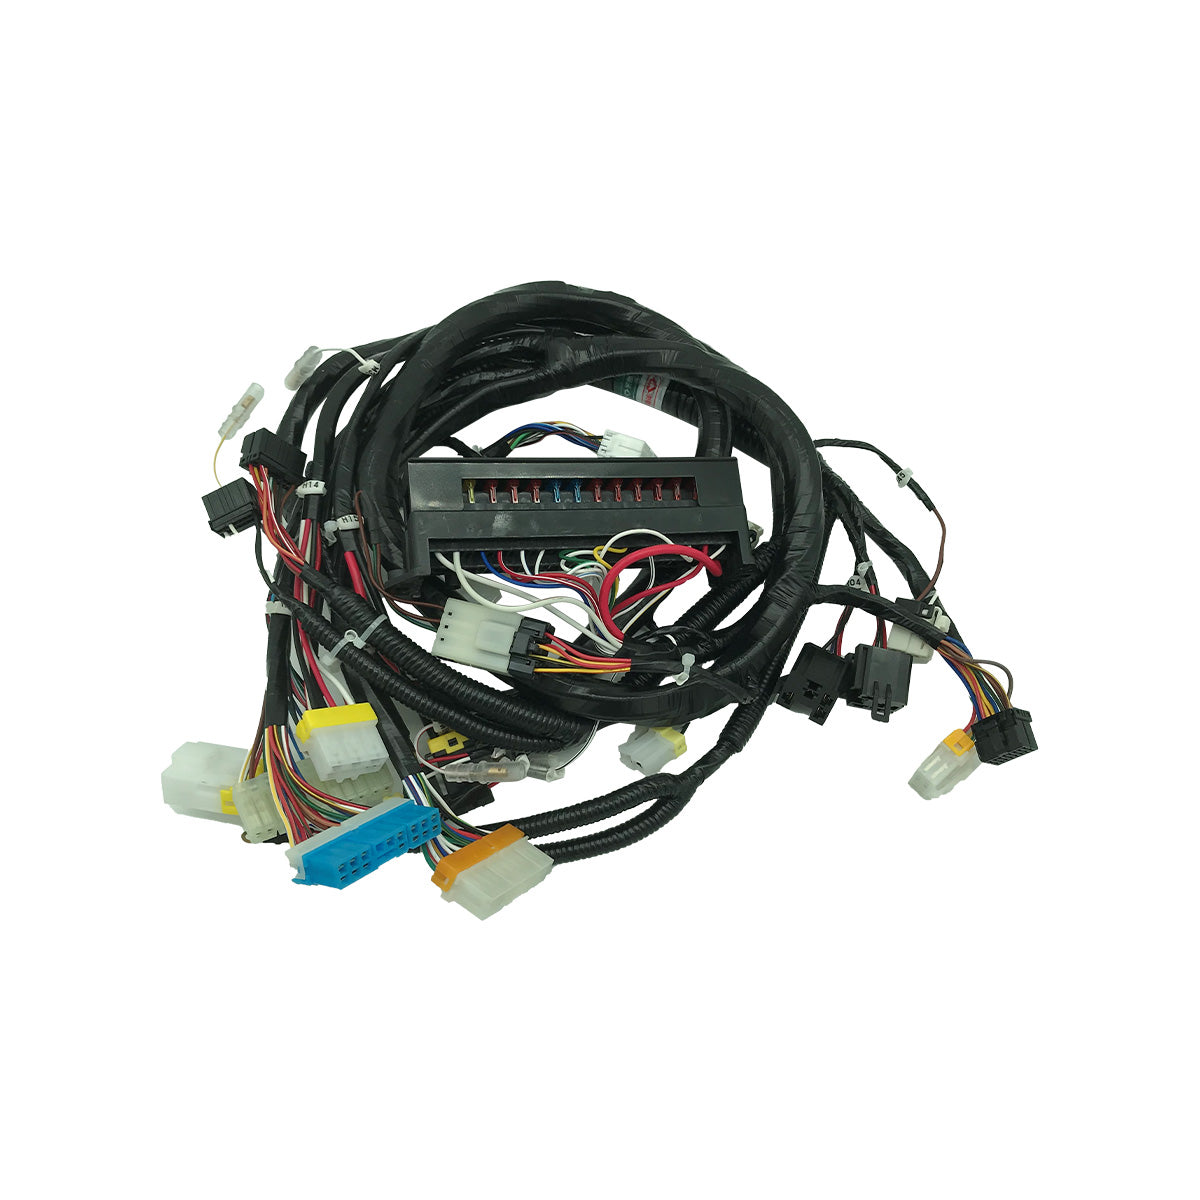 207-06-68120 Internal Wiring Harness for Komatsu PC300-6 PC400-6